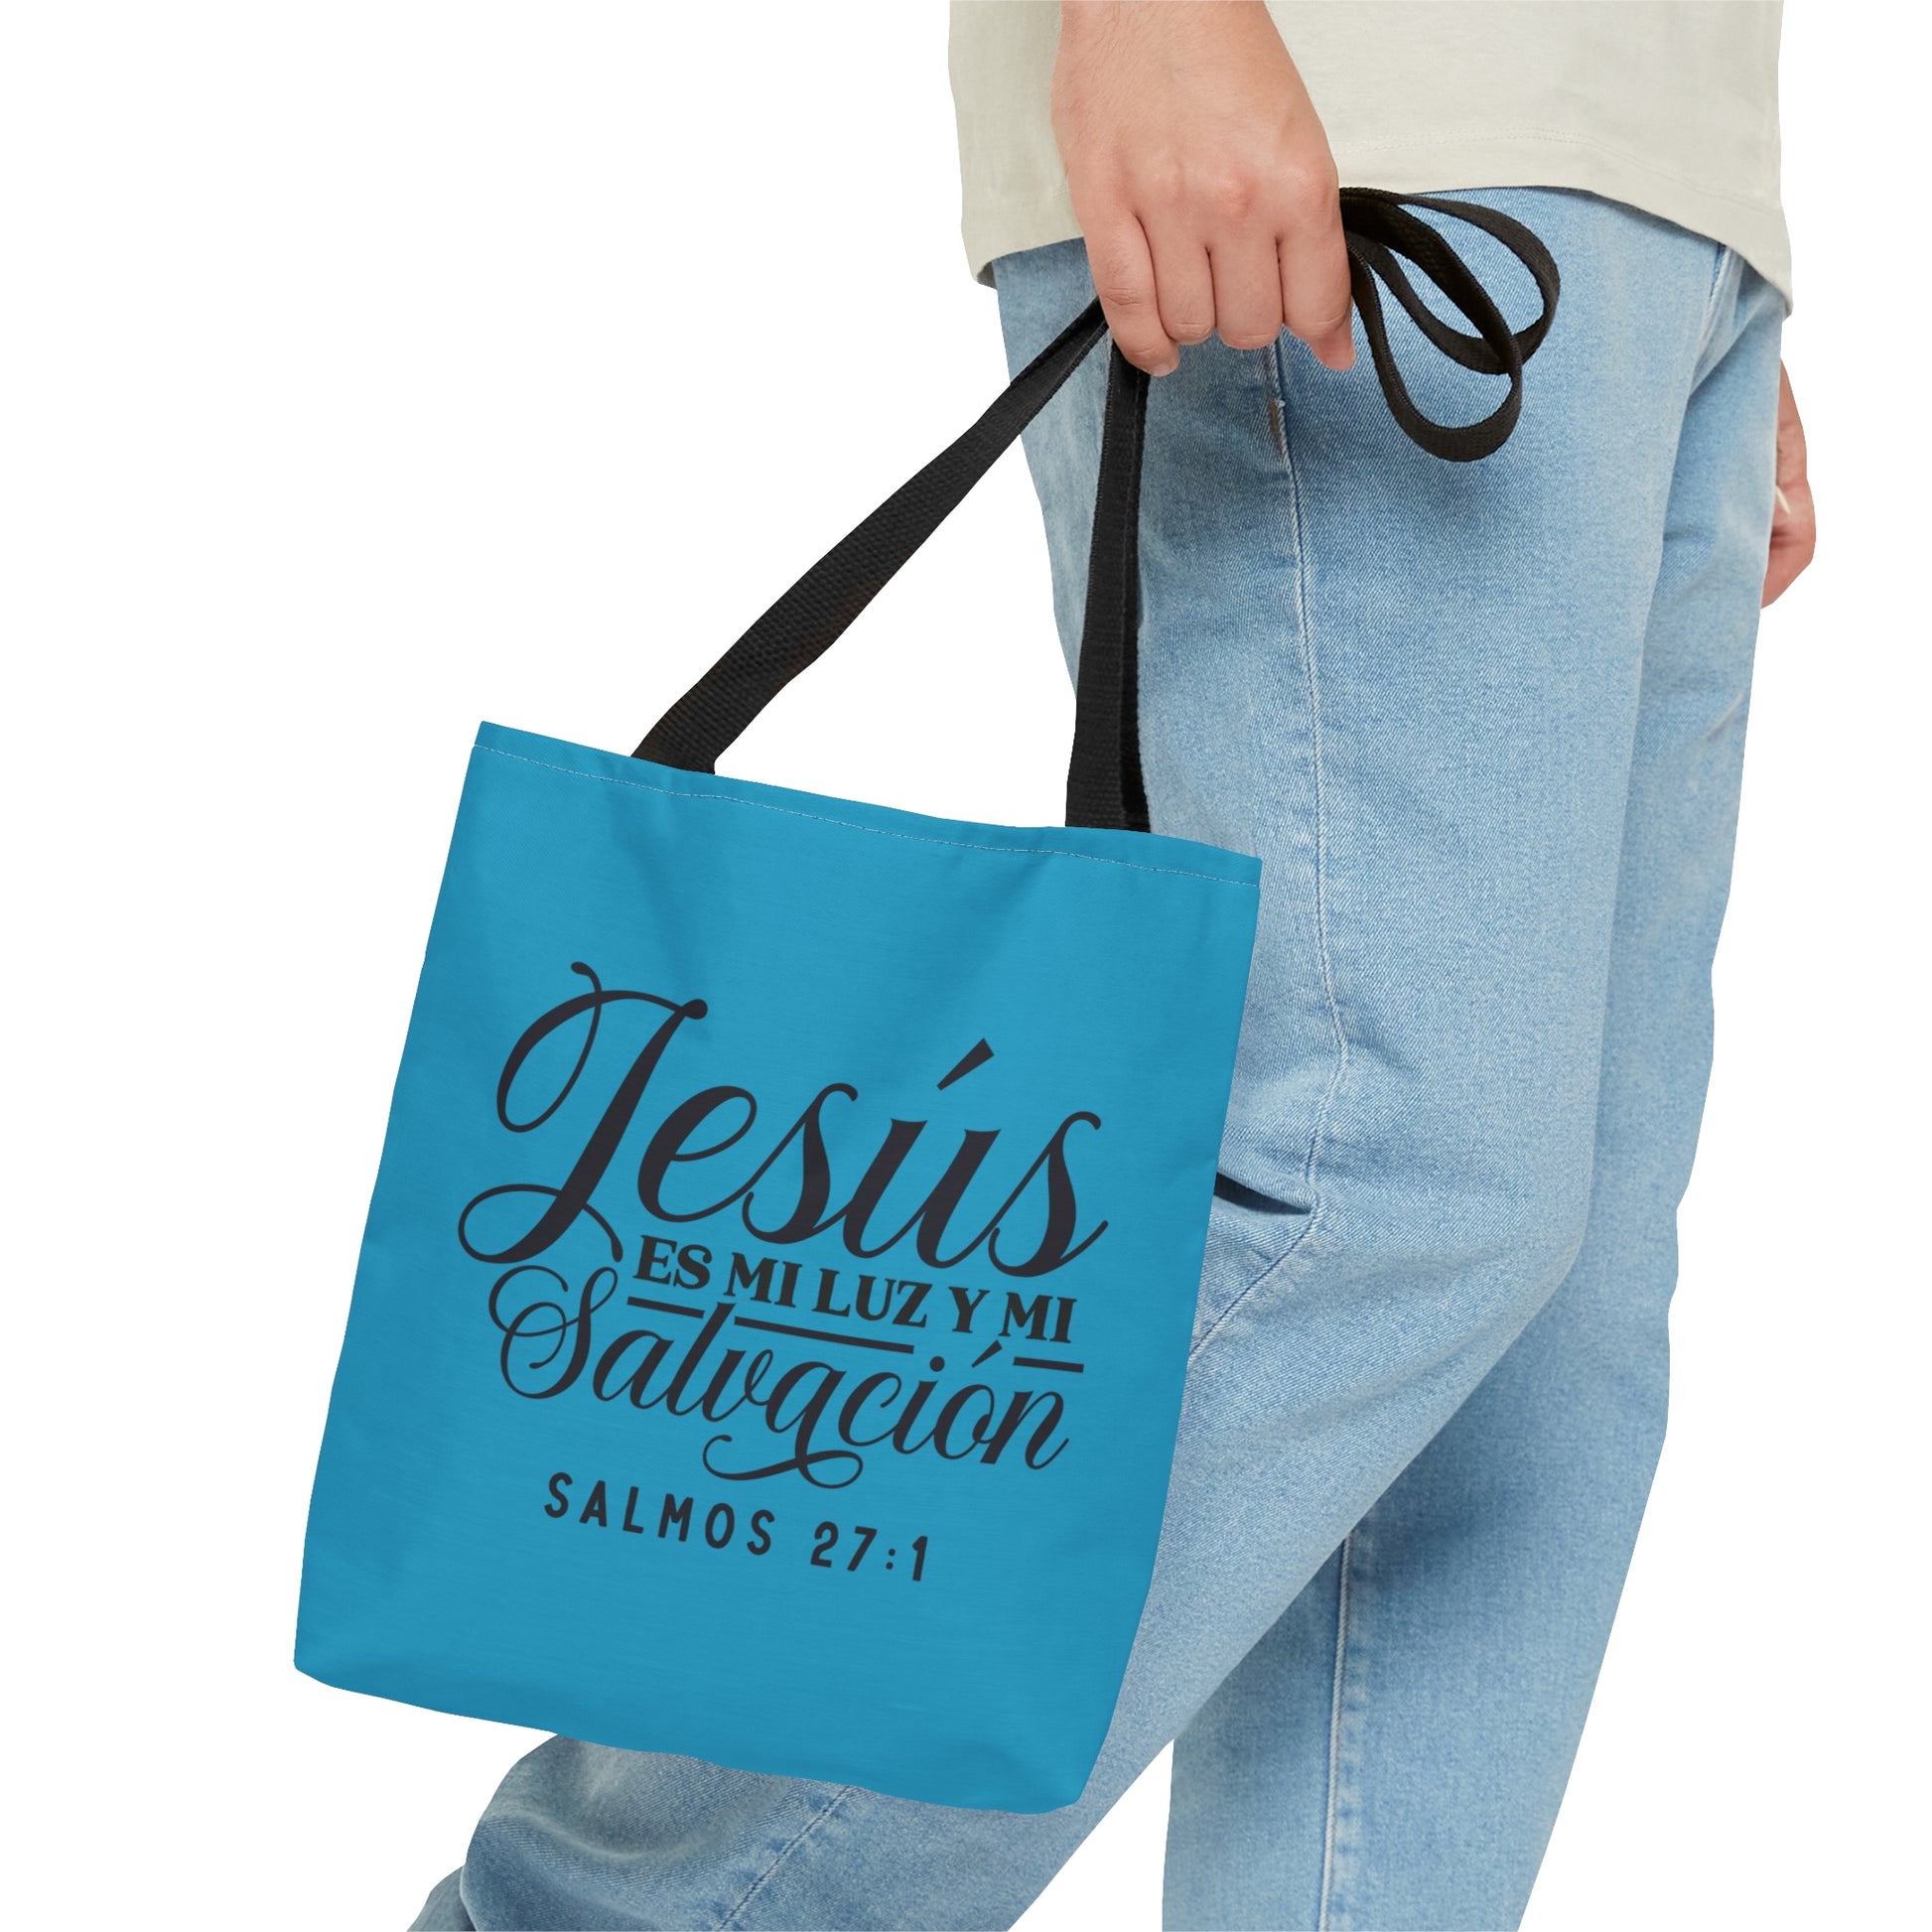 JESUS ES MI LUZ Y MI SALVACION Christian SPANISH Tote Bag Printify